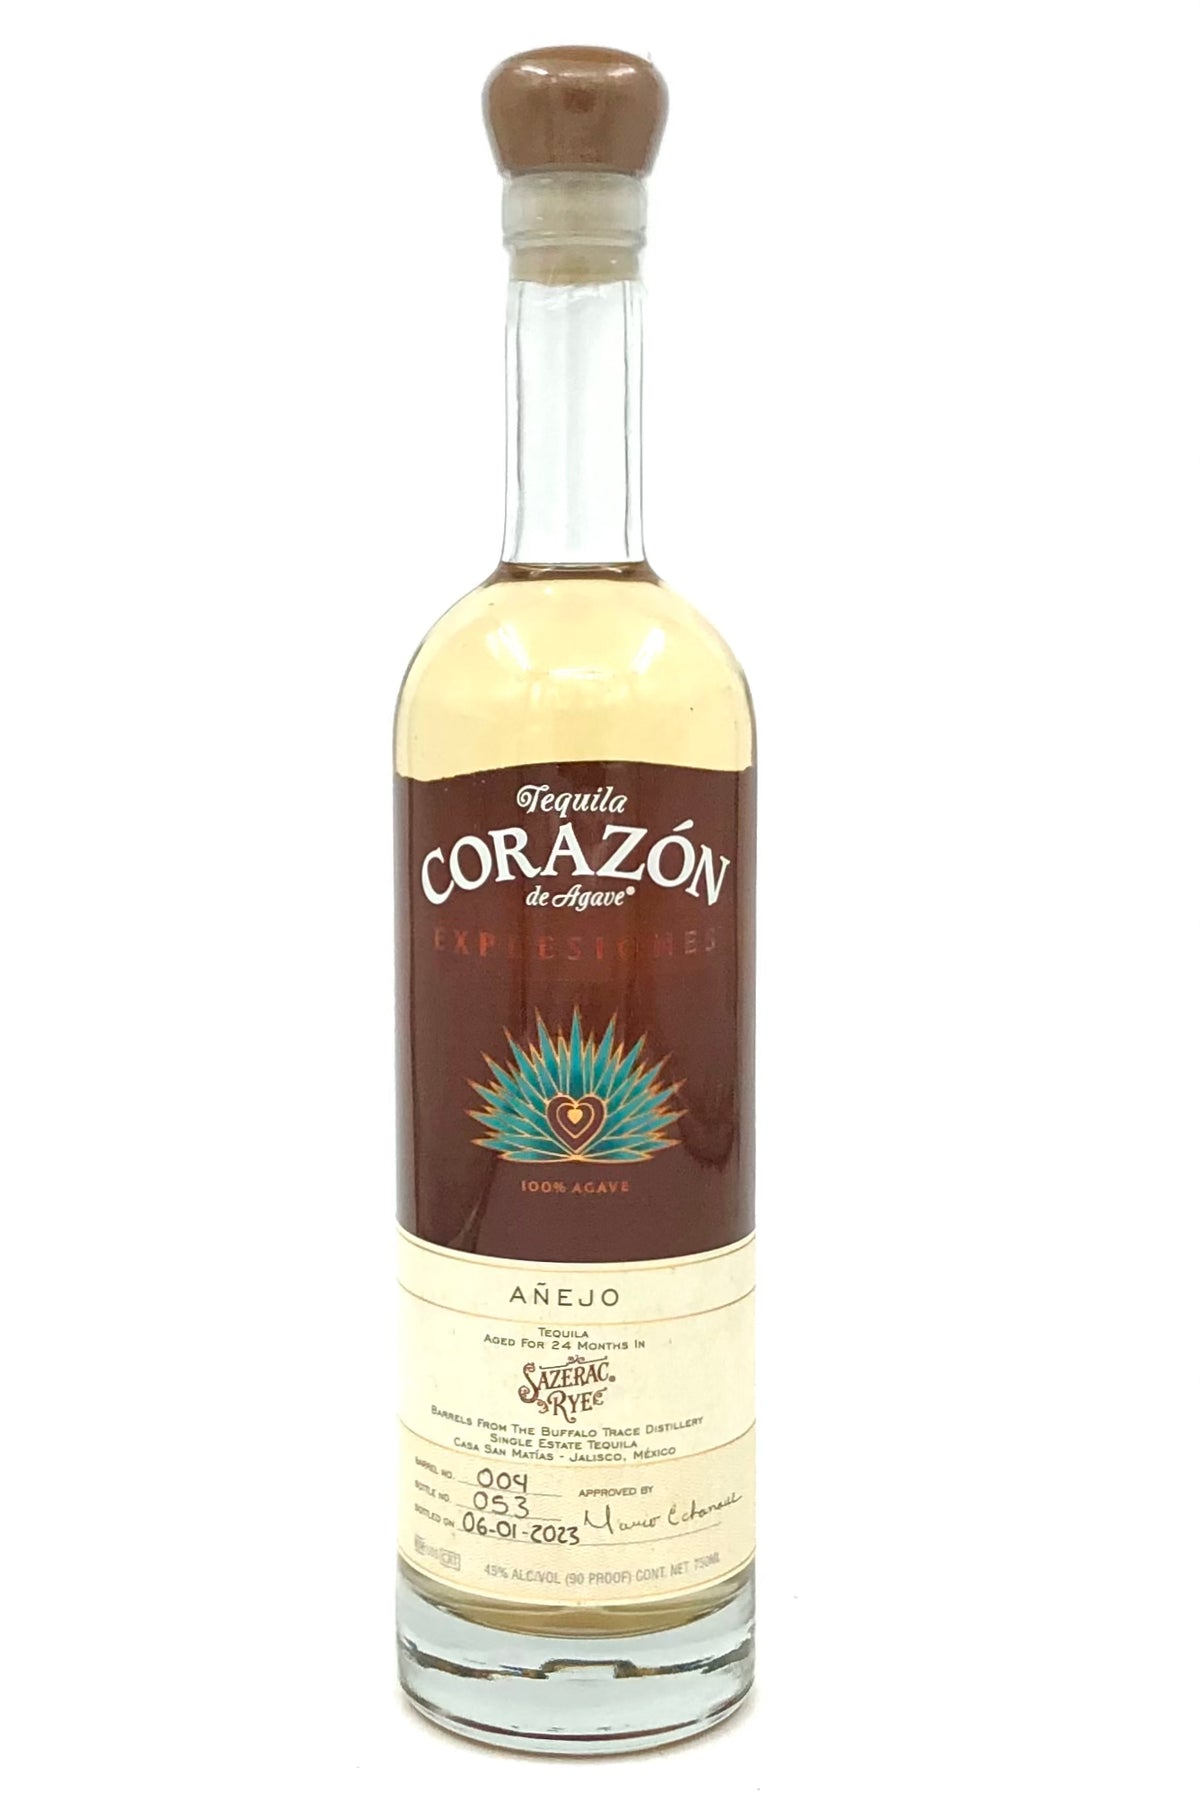 Expresiones del Corazon Sazerac Rye Barrel Anejo Tequila